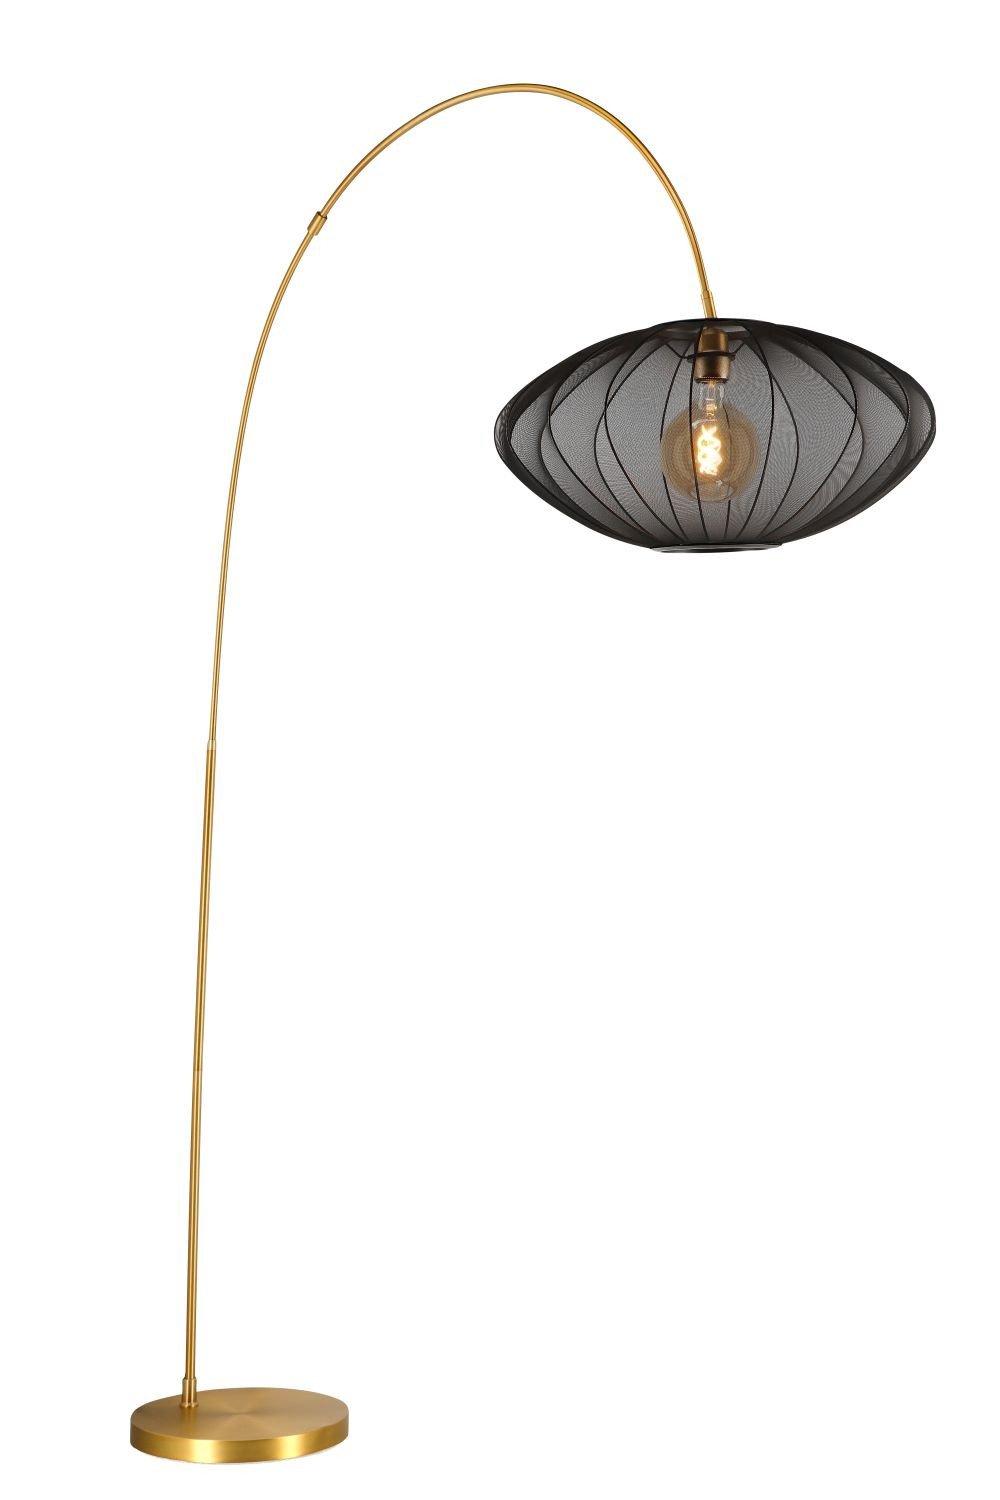 Lucide CORINA Arc Floor Lamp E27 Oval Shape Modern Free Standing Indoor Lighting